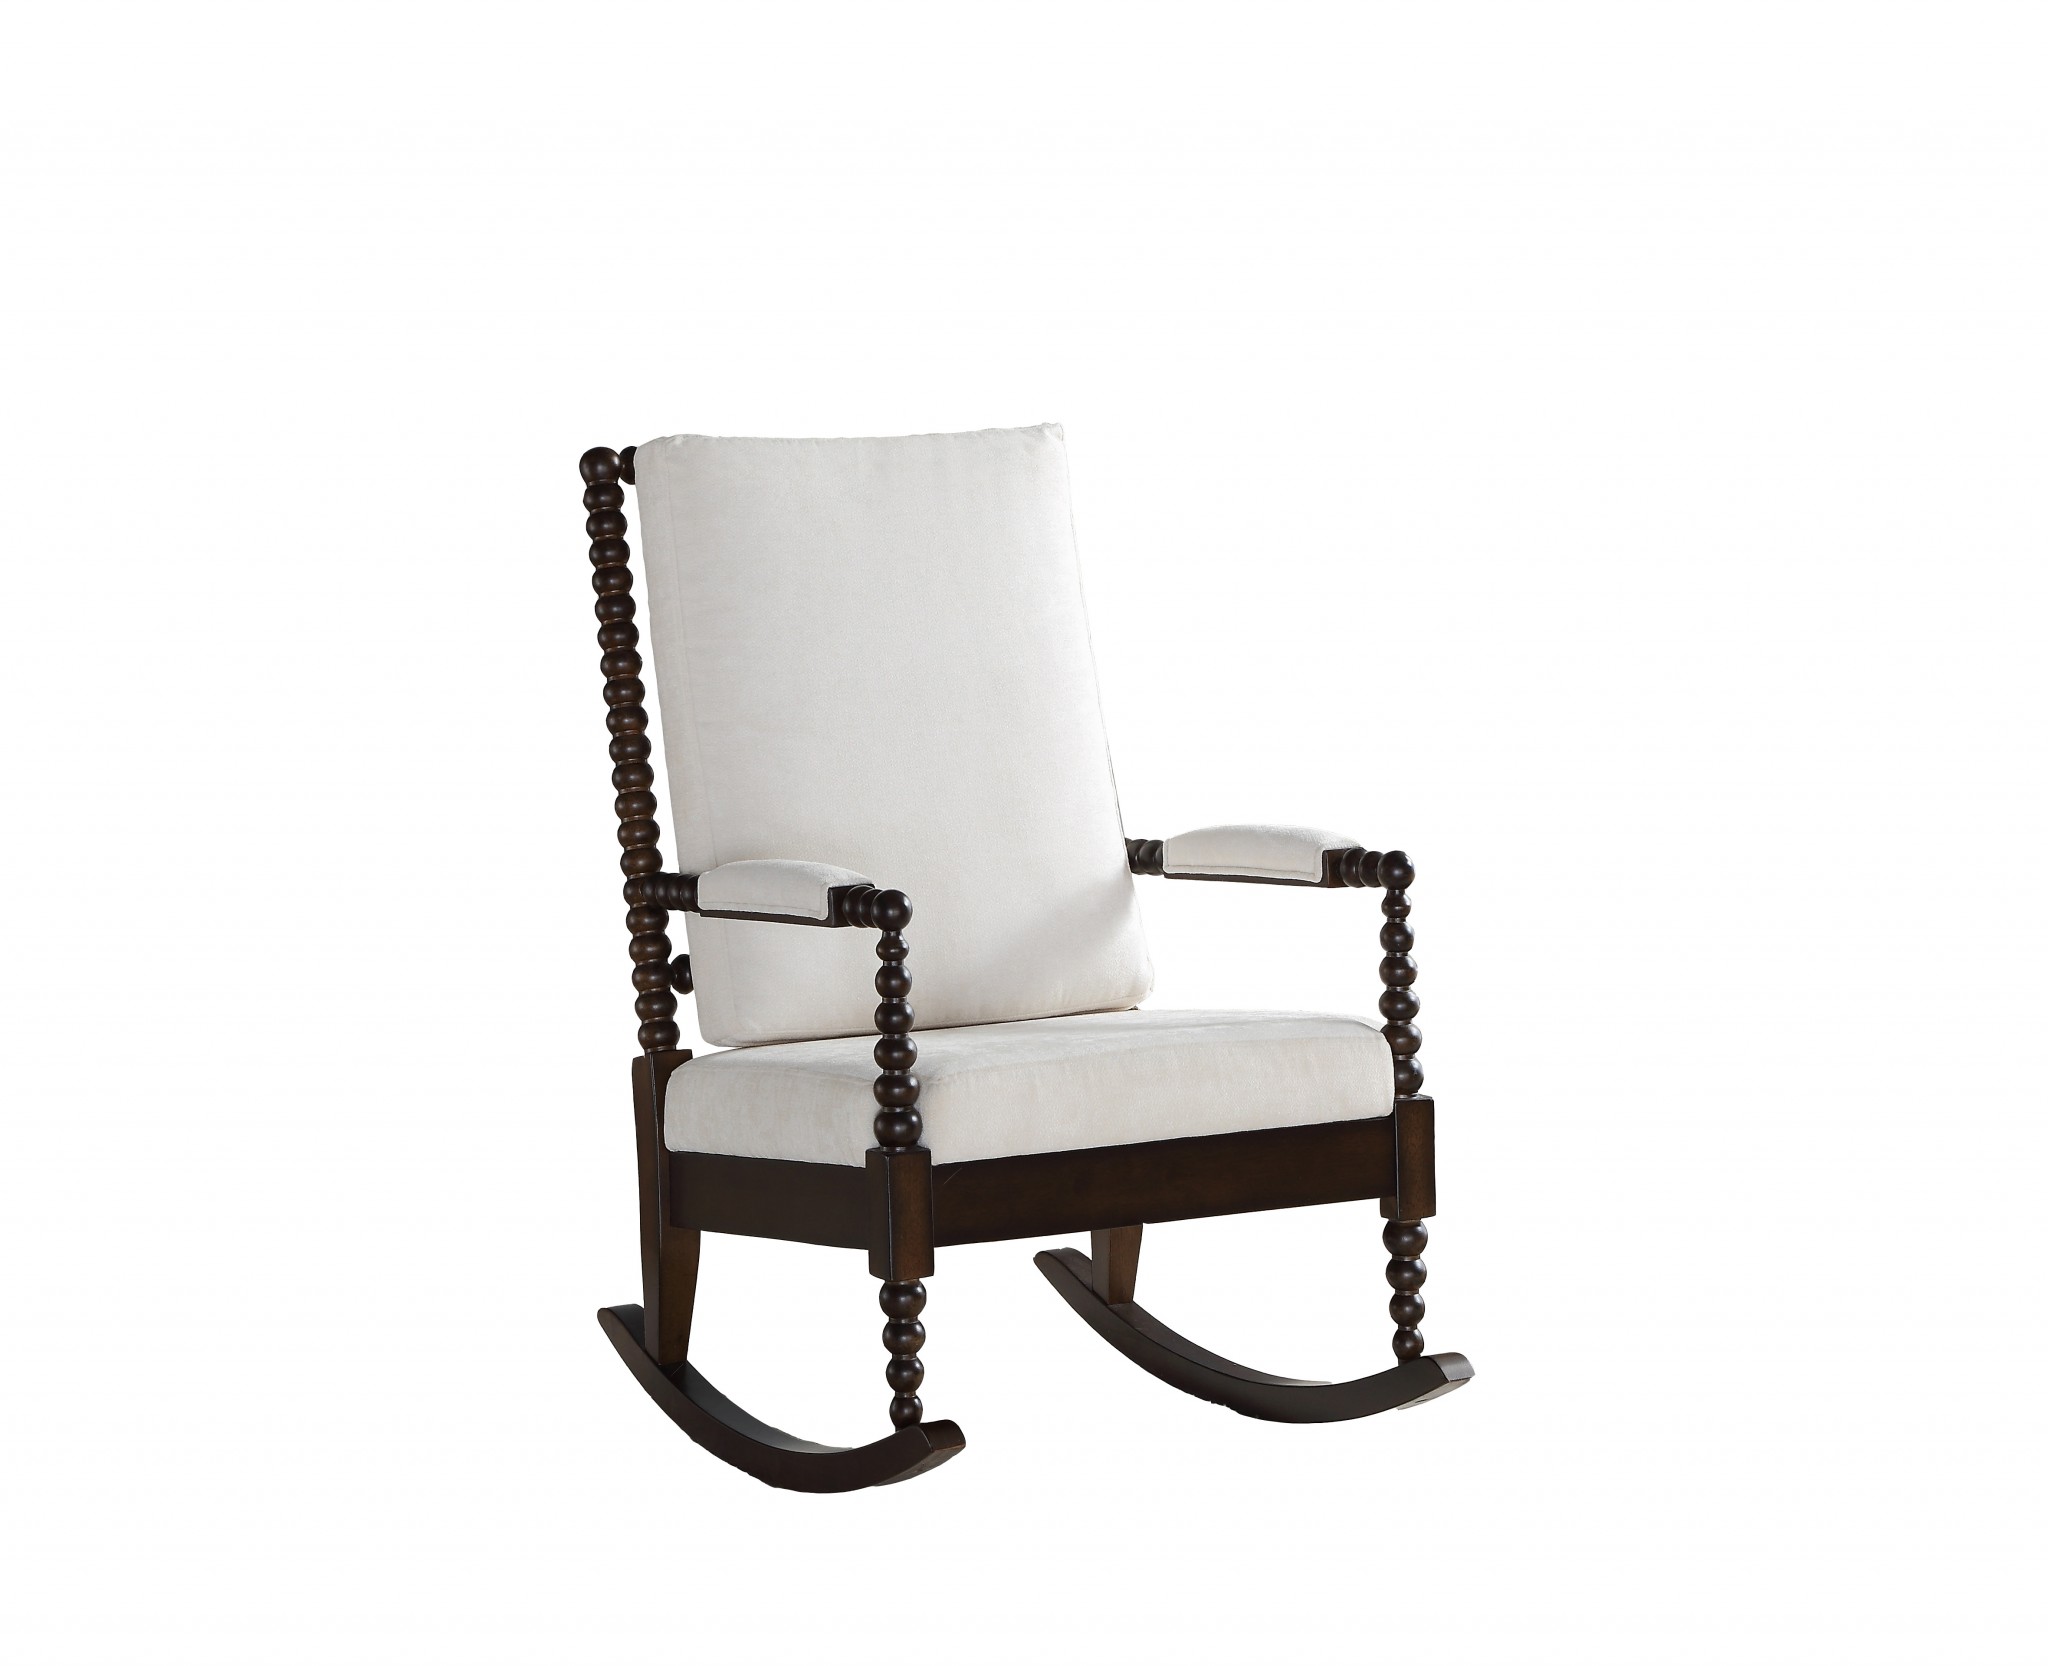 25" X 33" X 41" Cream Fabric Walnut Wood Upholstered (Seat) Rocking Chair